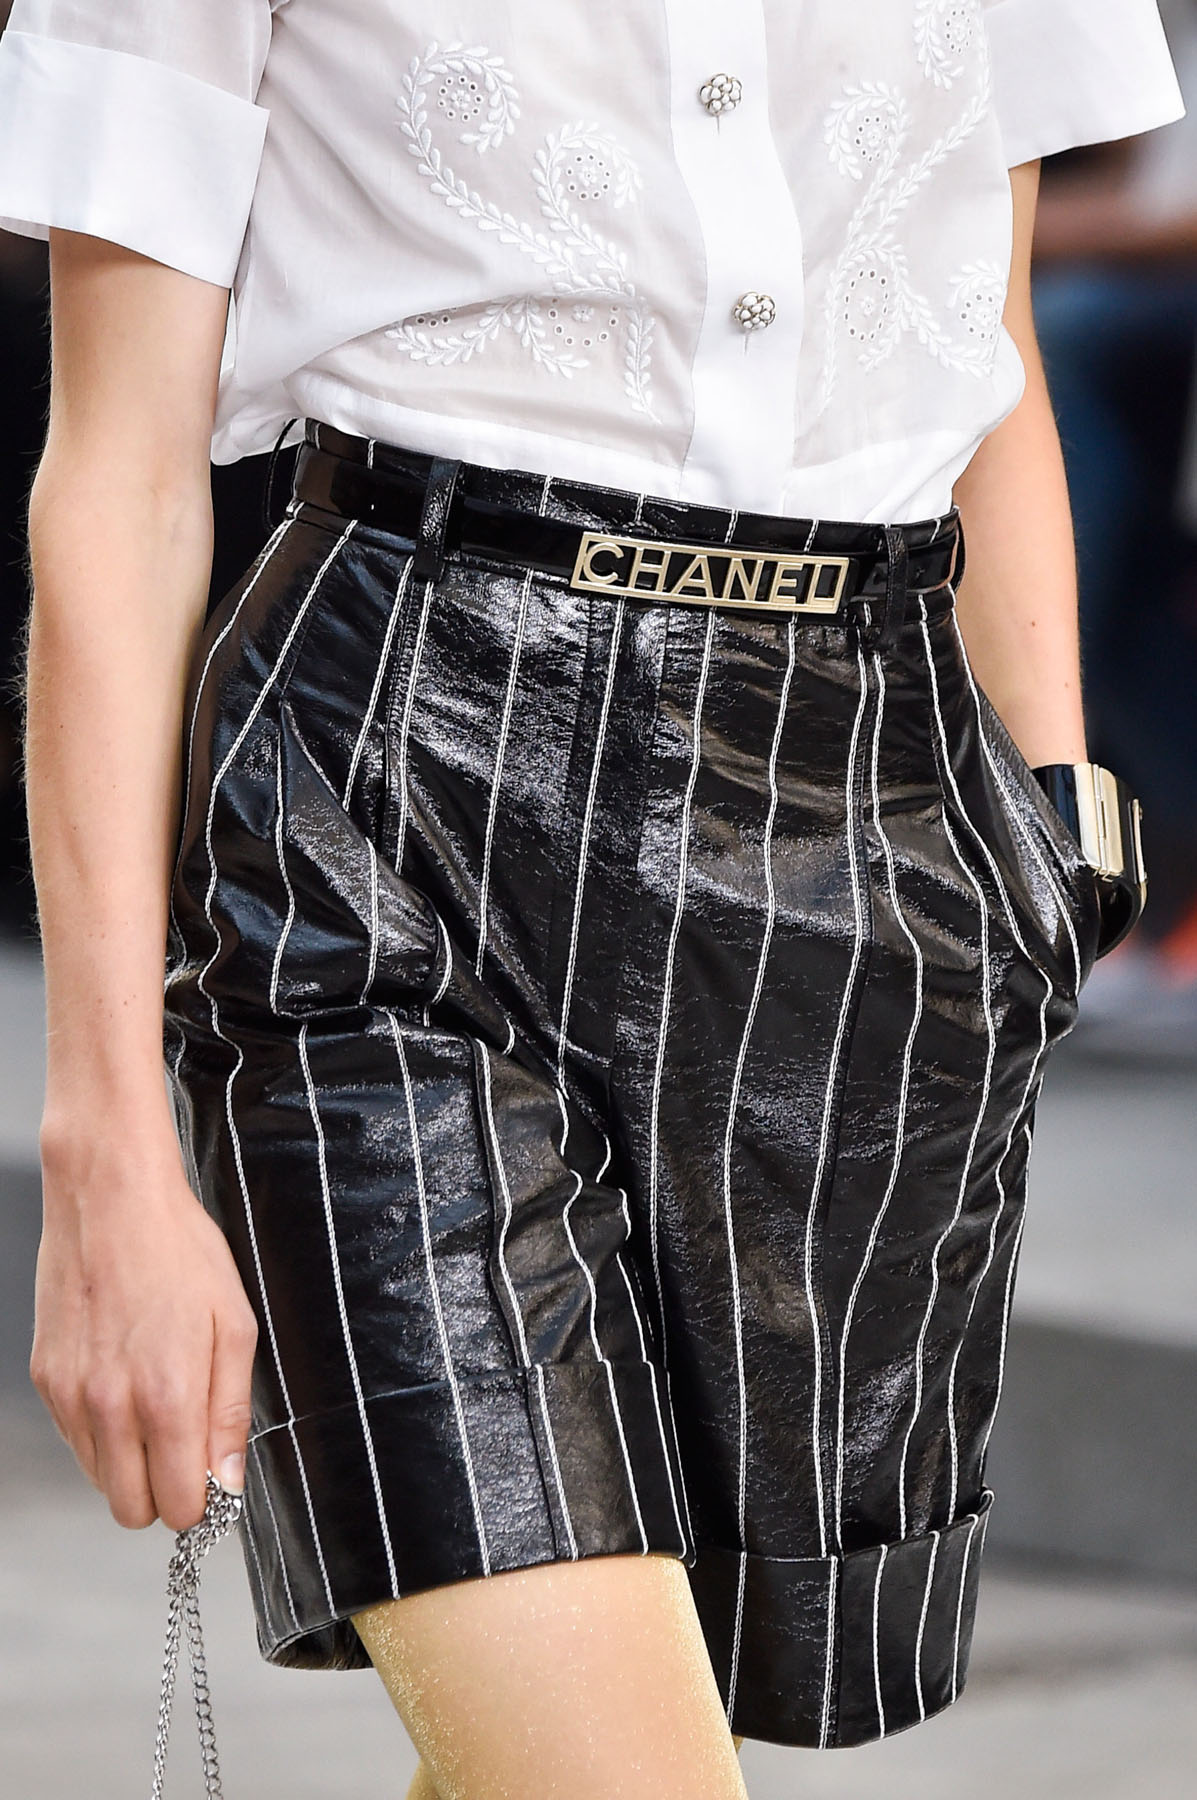 Chanel-detalhes-verao2015-paris-52